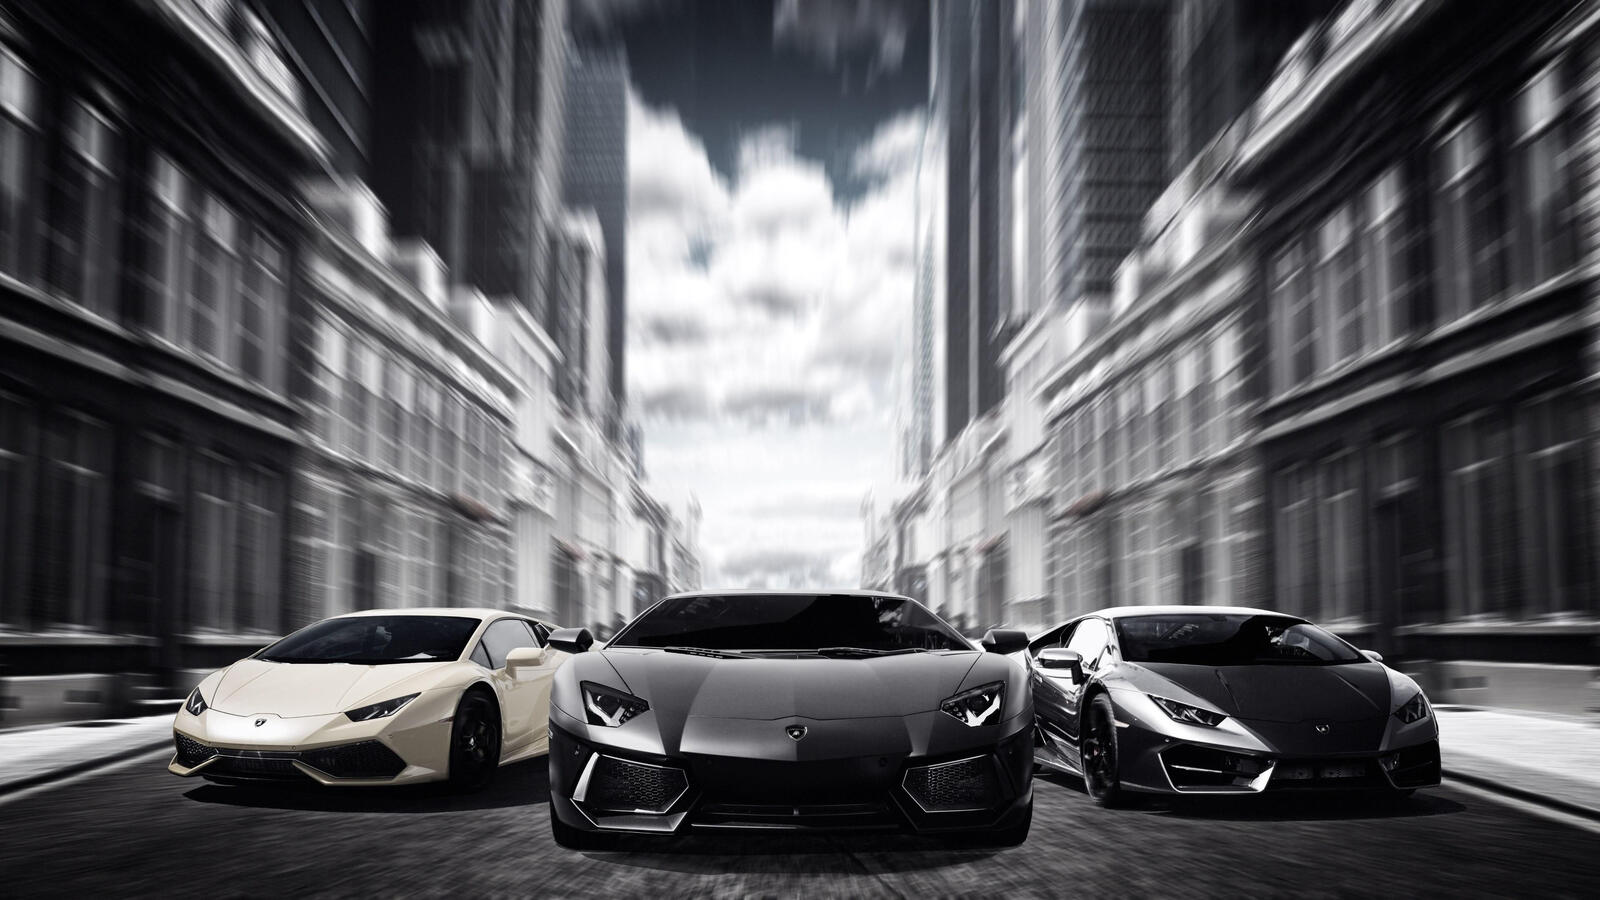 Wallpapers Lamborghini three car city street gray background on the desktop